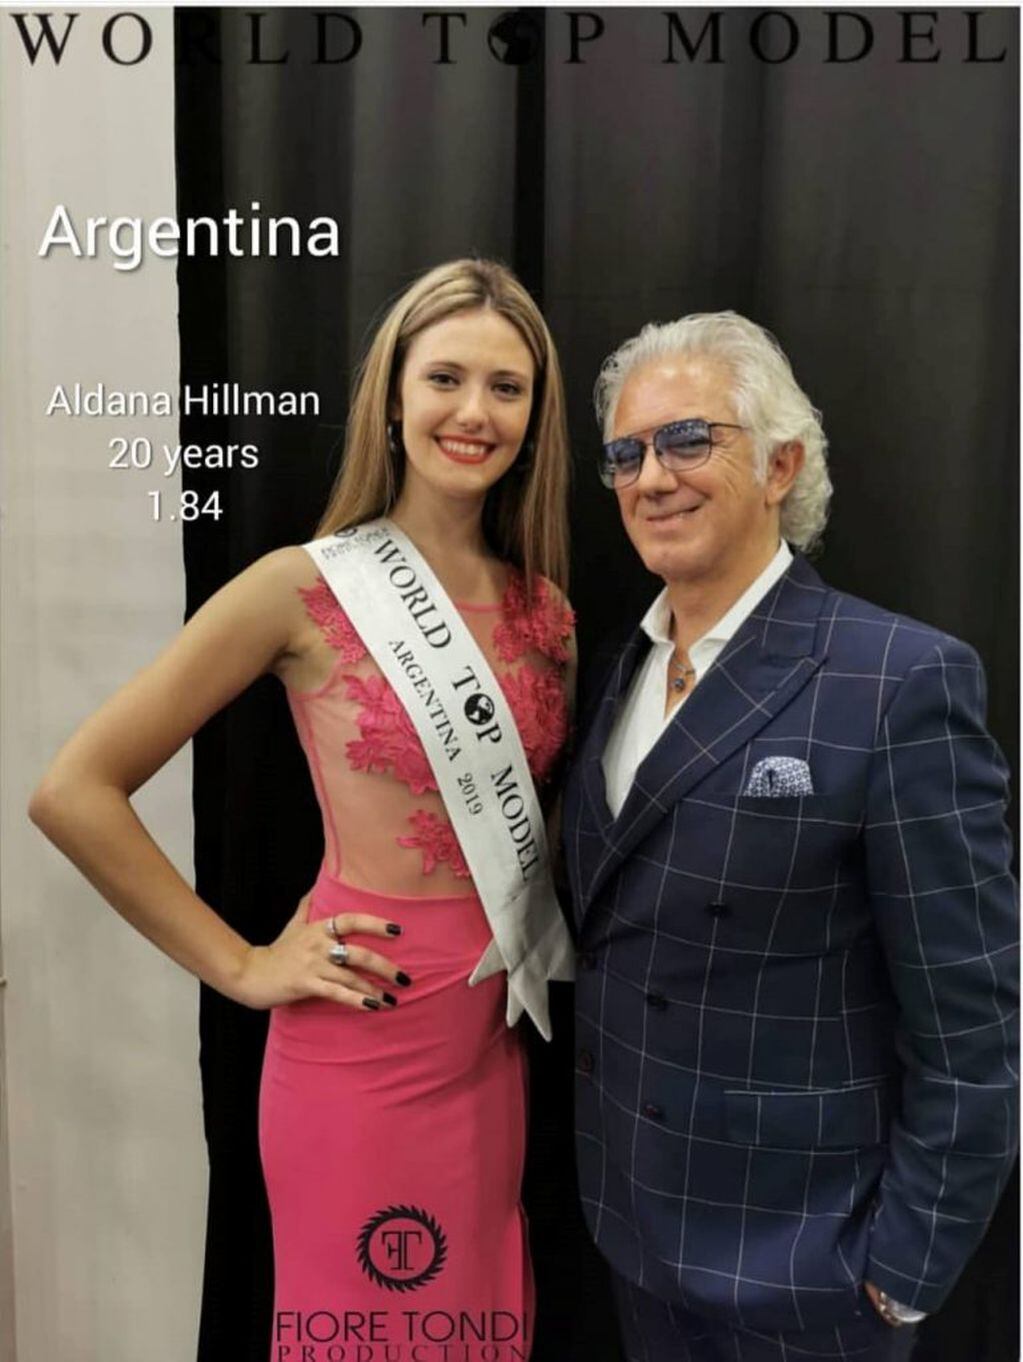 Aldana Hillmann - Embajadora Argentina
Crédito: Facebook